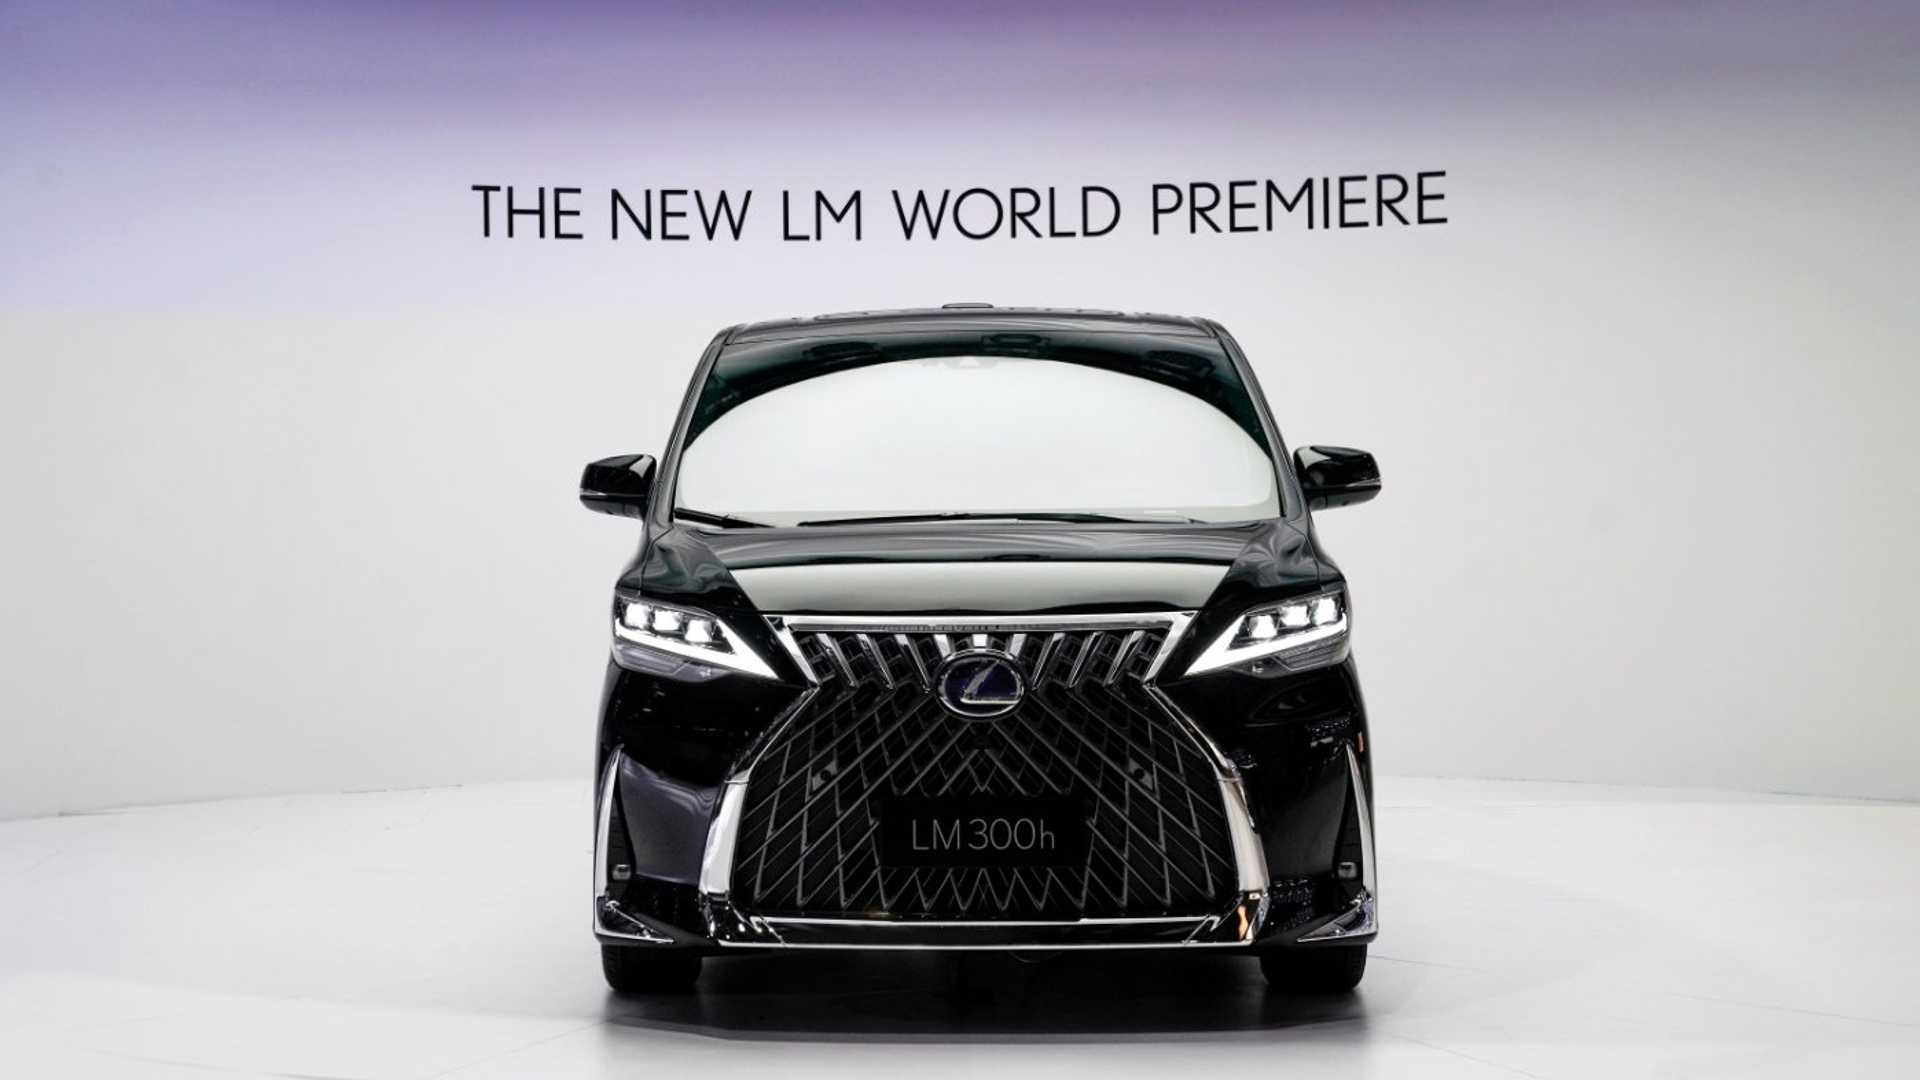 Lexus LM 300h Luxury Minivan Debuts, Looks Amazing autoevolution